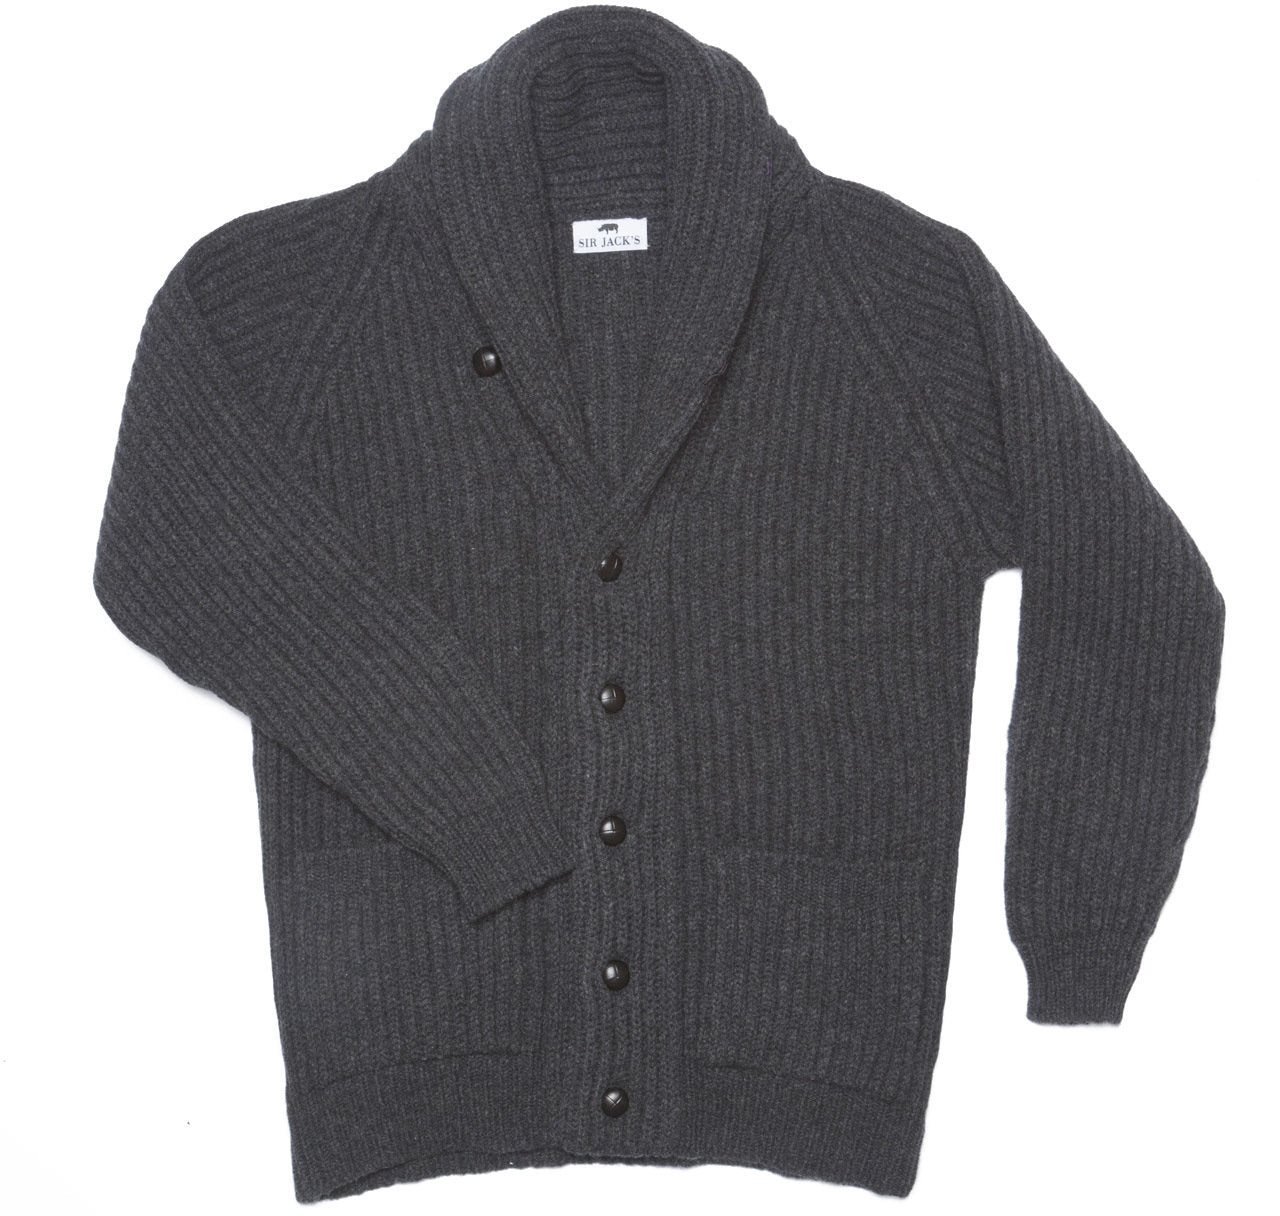 Sir Jack's Highland Charcoal Shawl Cardigan Sweater